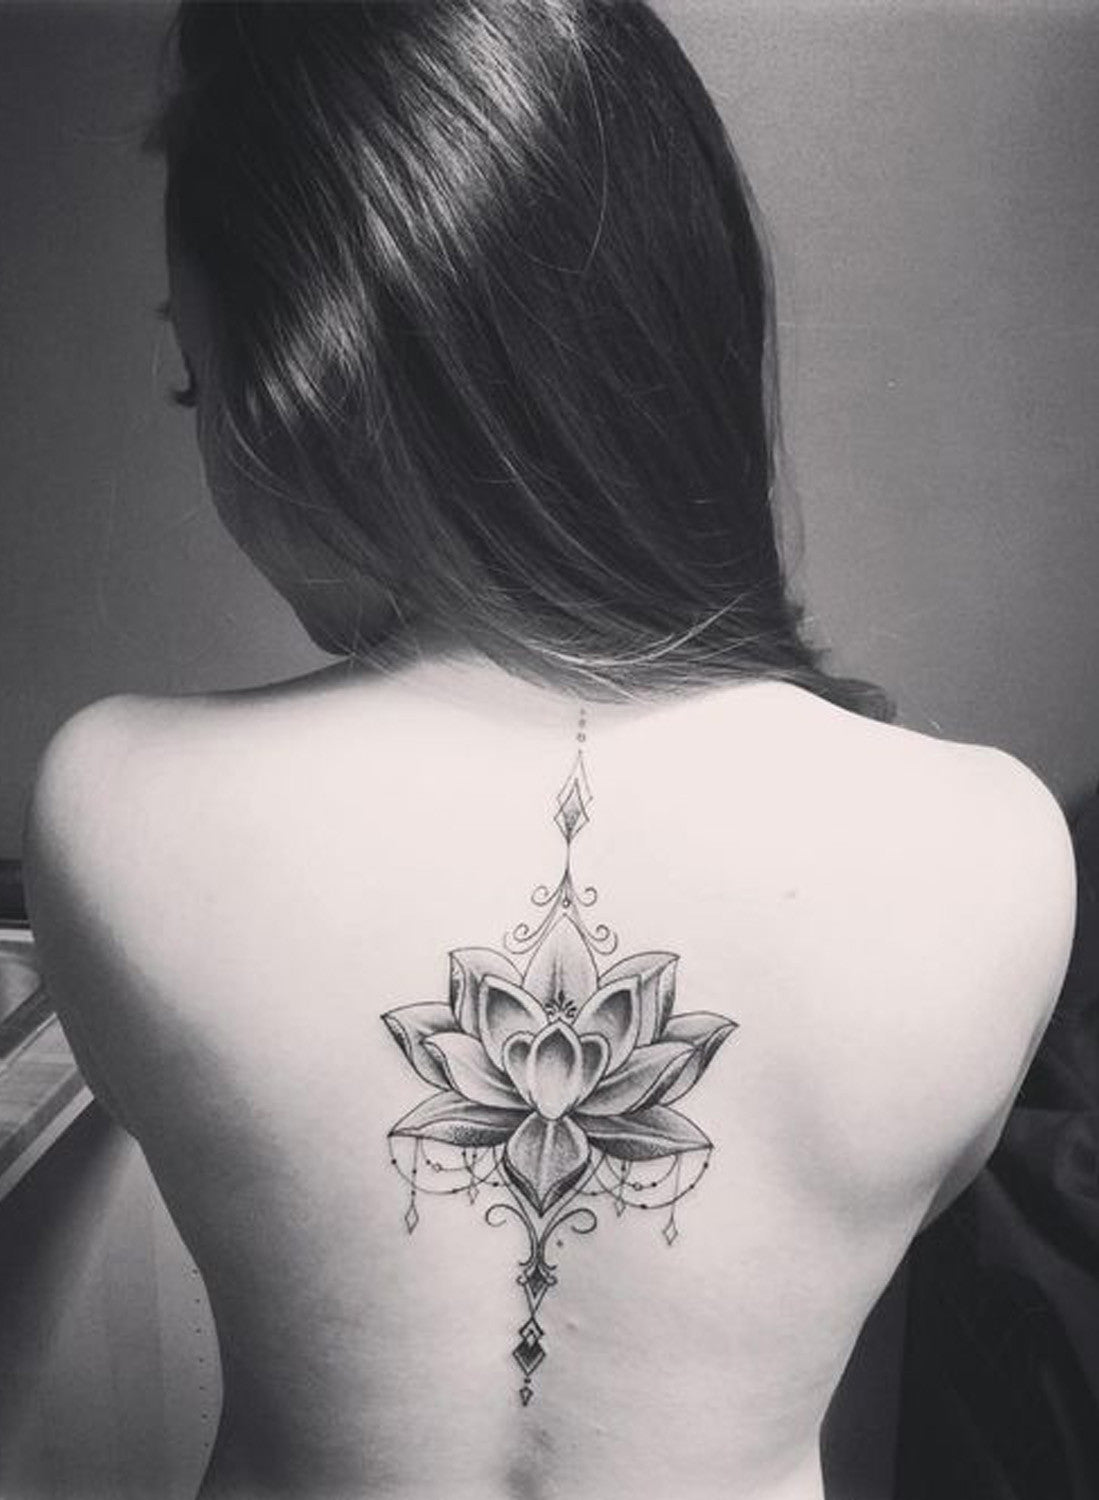 Mandala Lotus Flower Back Spine Tattoo Placement Ideas for Women at MyBodiArt.com